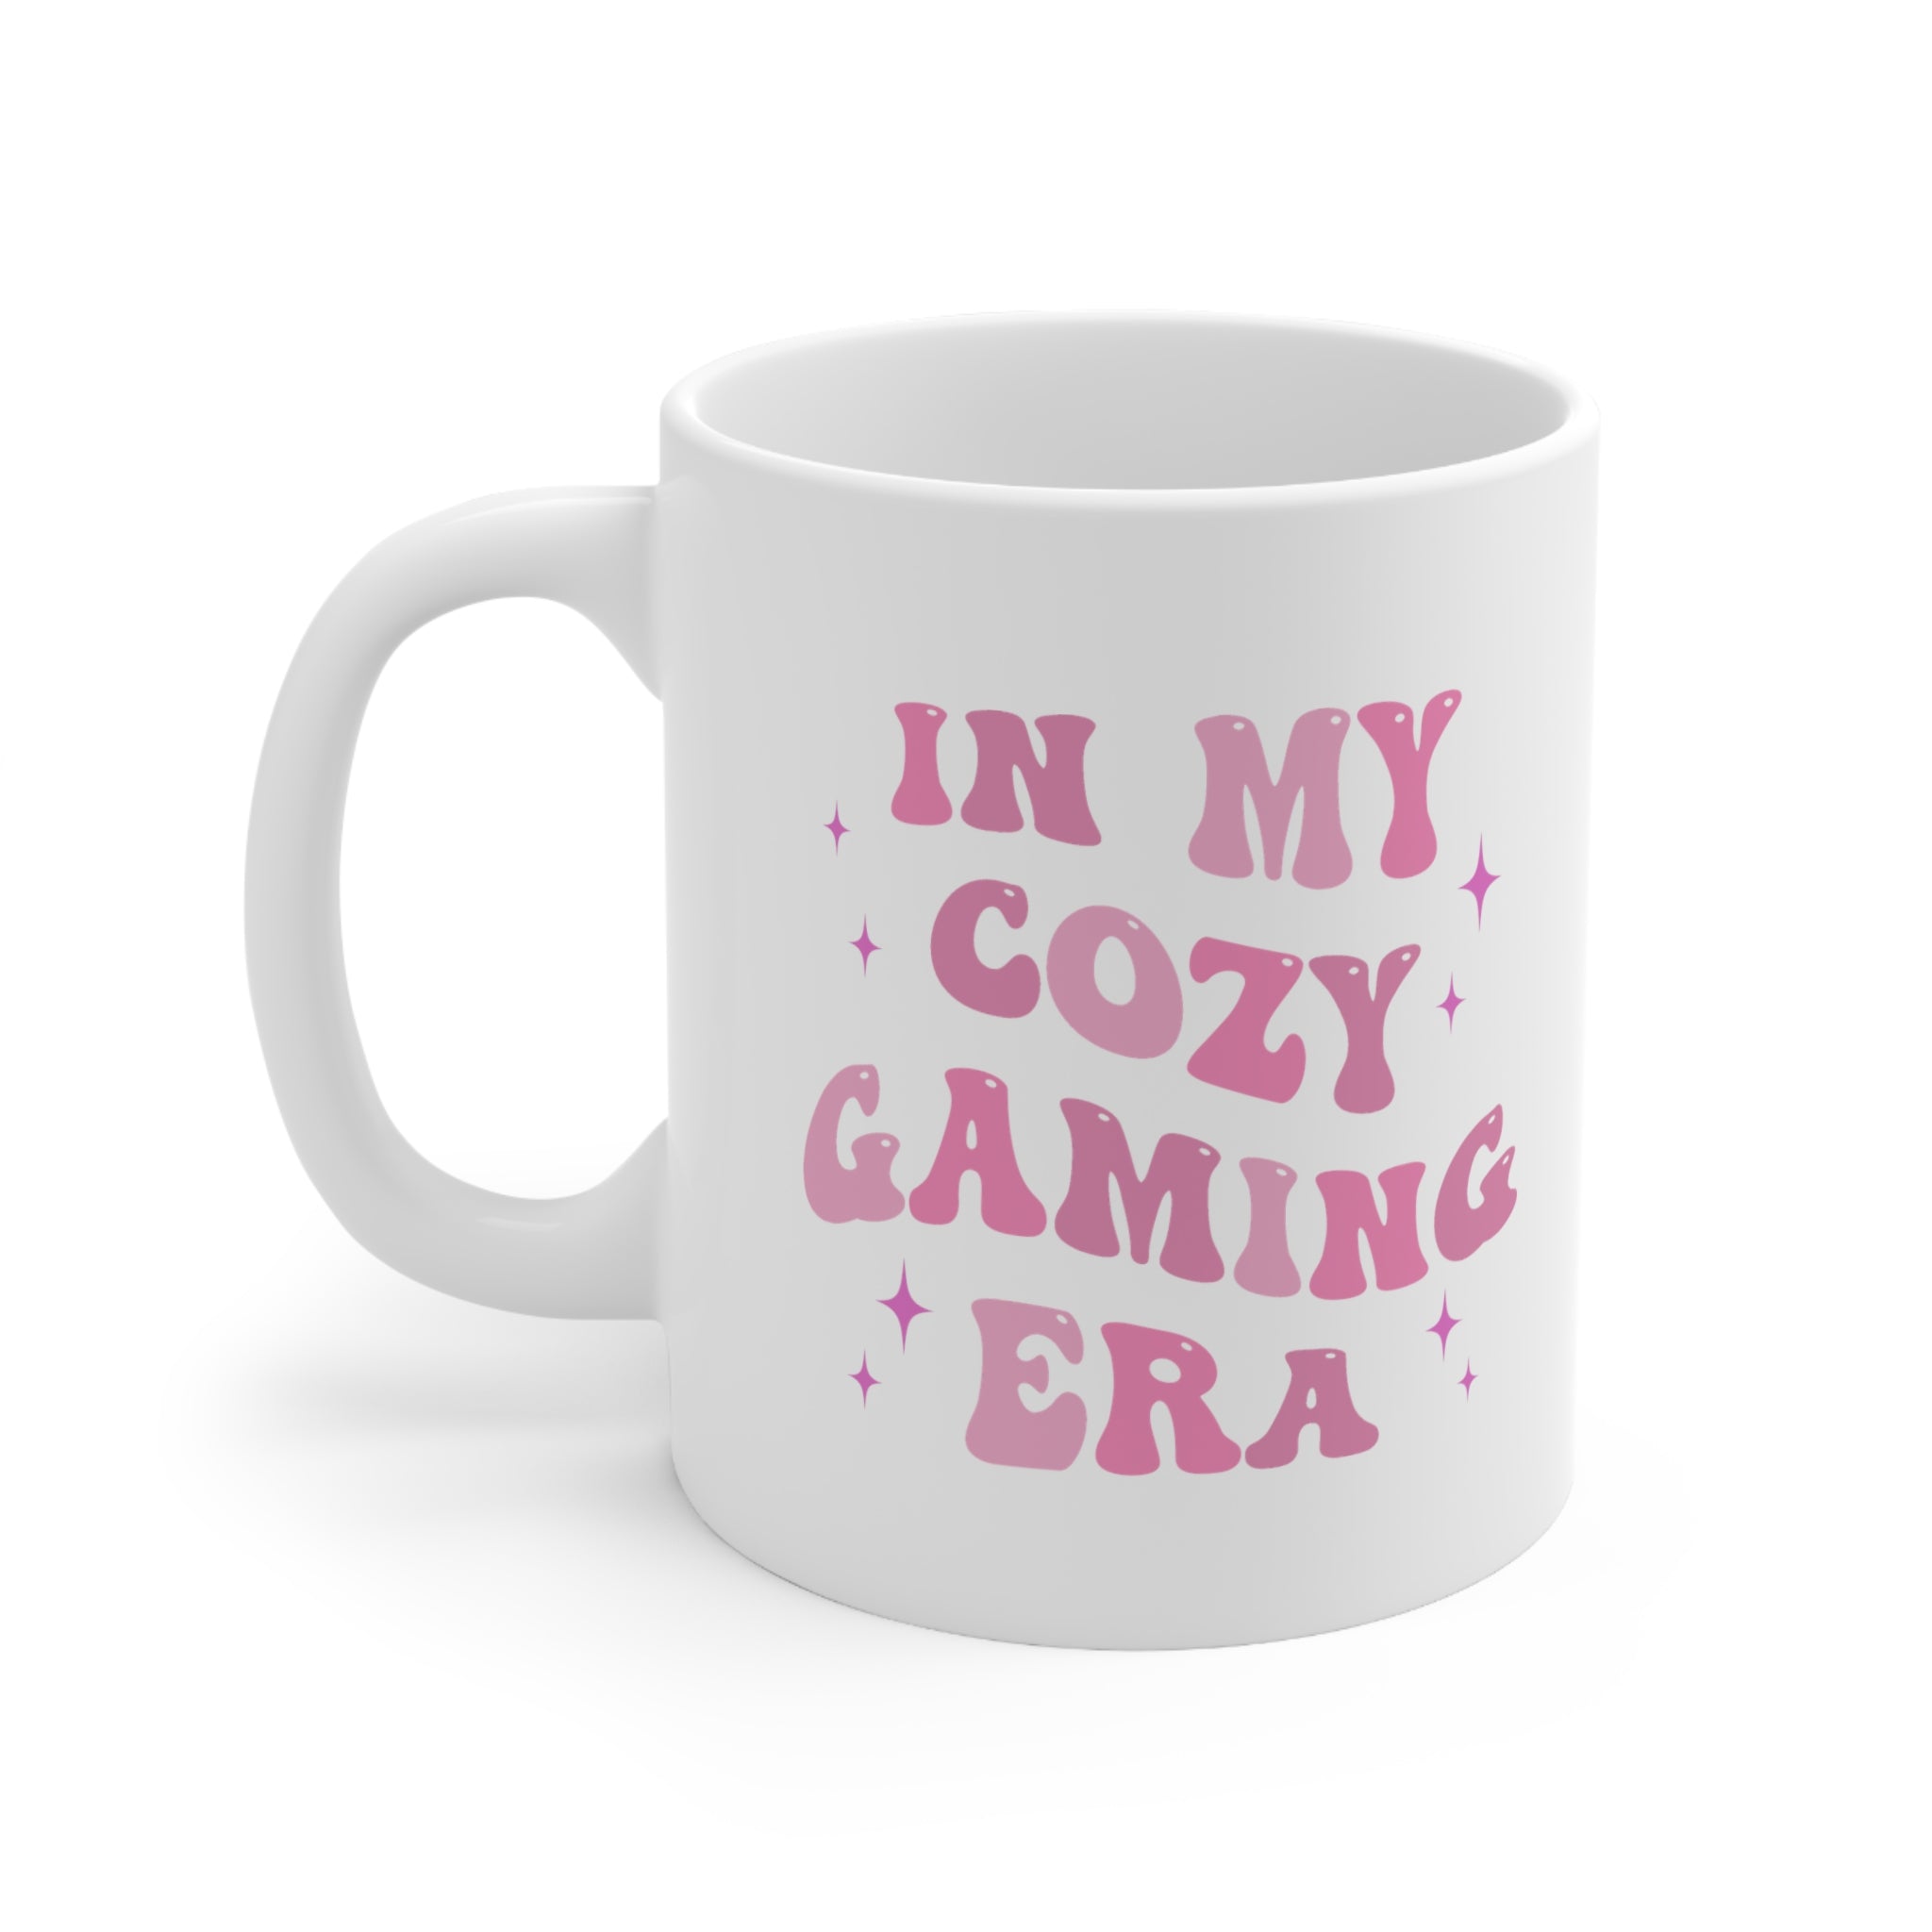 In My Cozy Gaming Era Mug 11oz - Gamer Mug, Gift for Gamer, Cute Mug, Cozy Gamer Mug